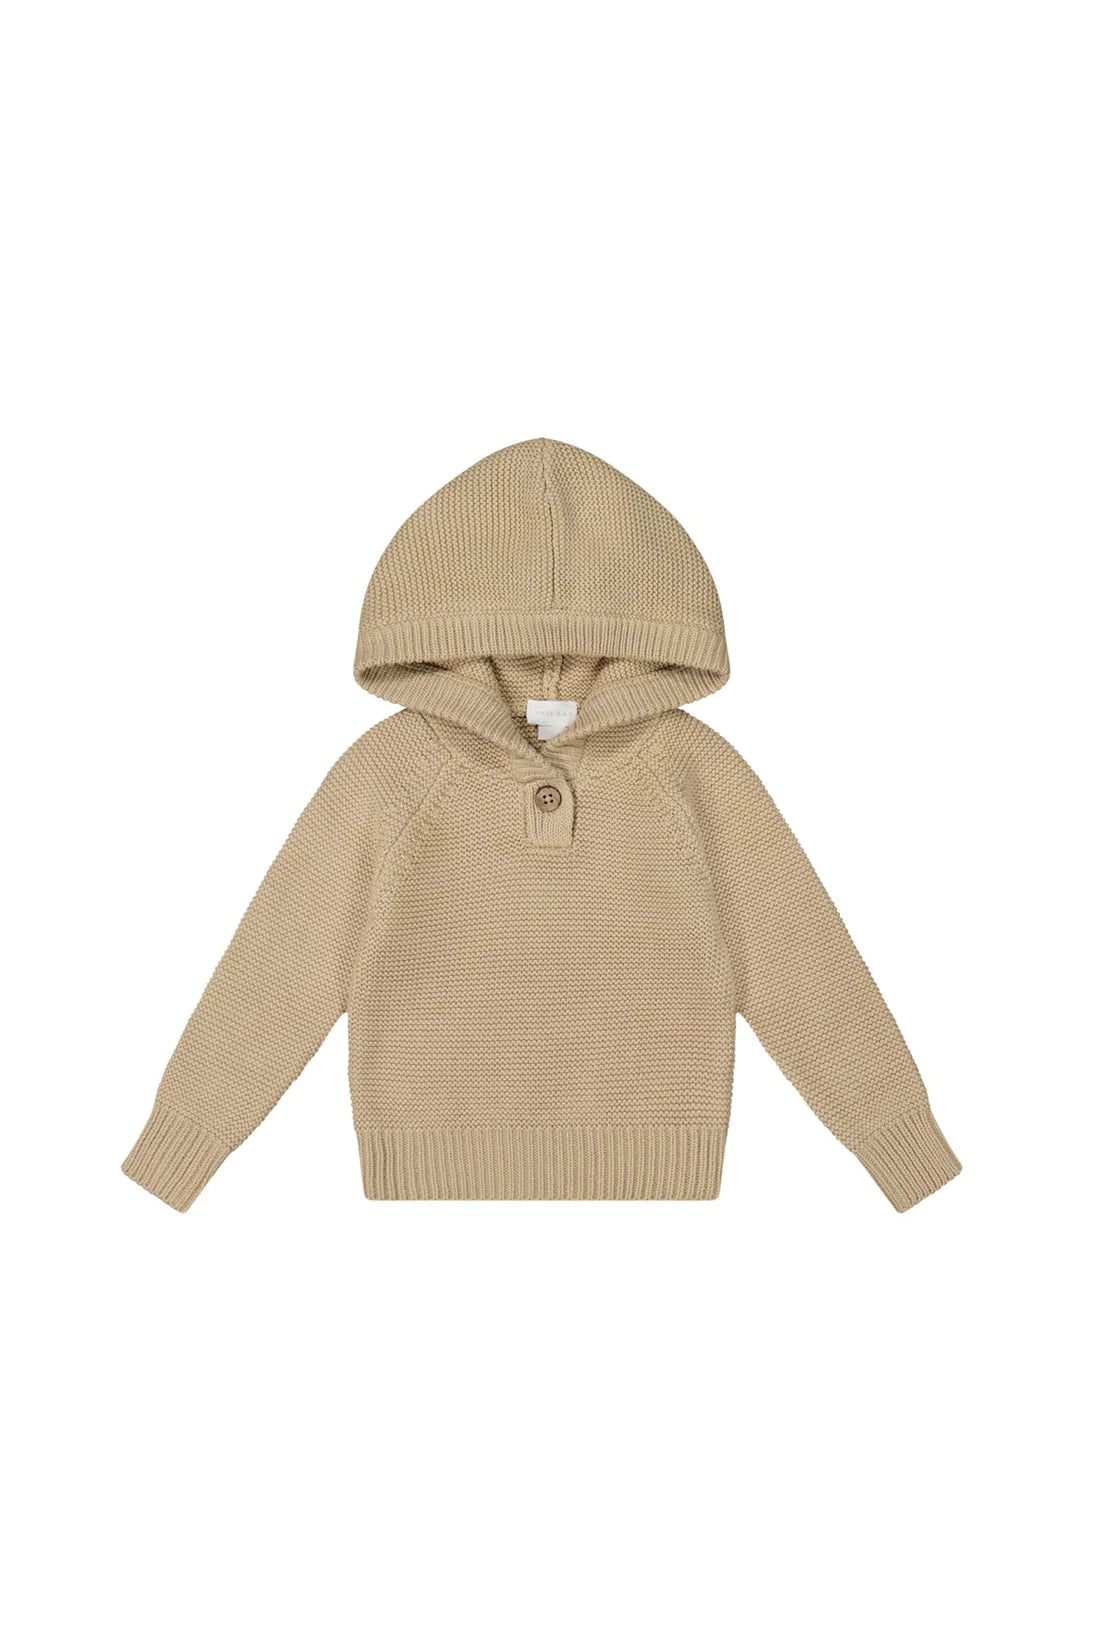 Arlo Hooded Sweater | Rye